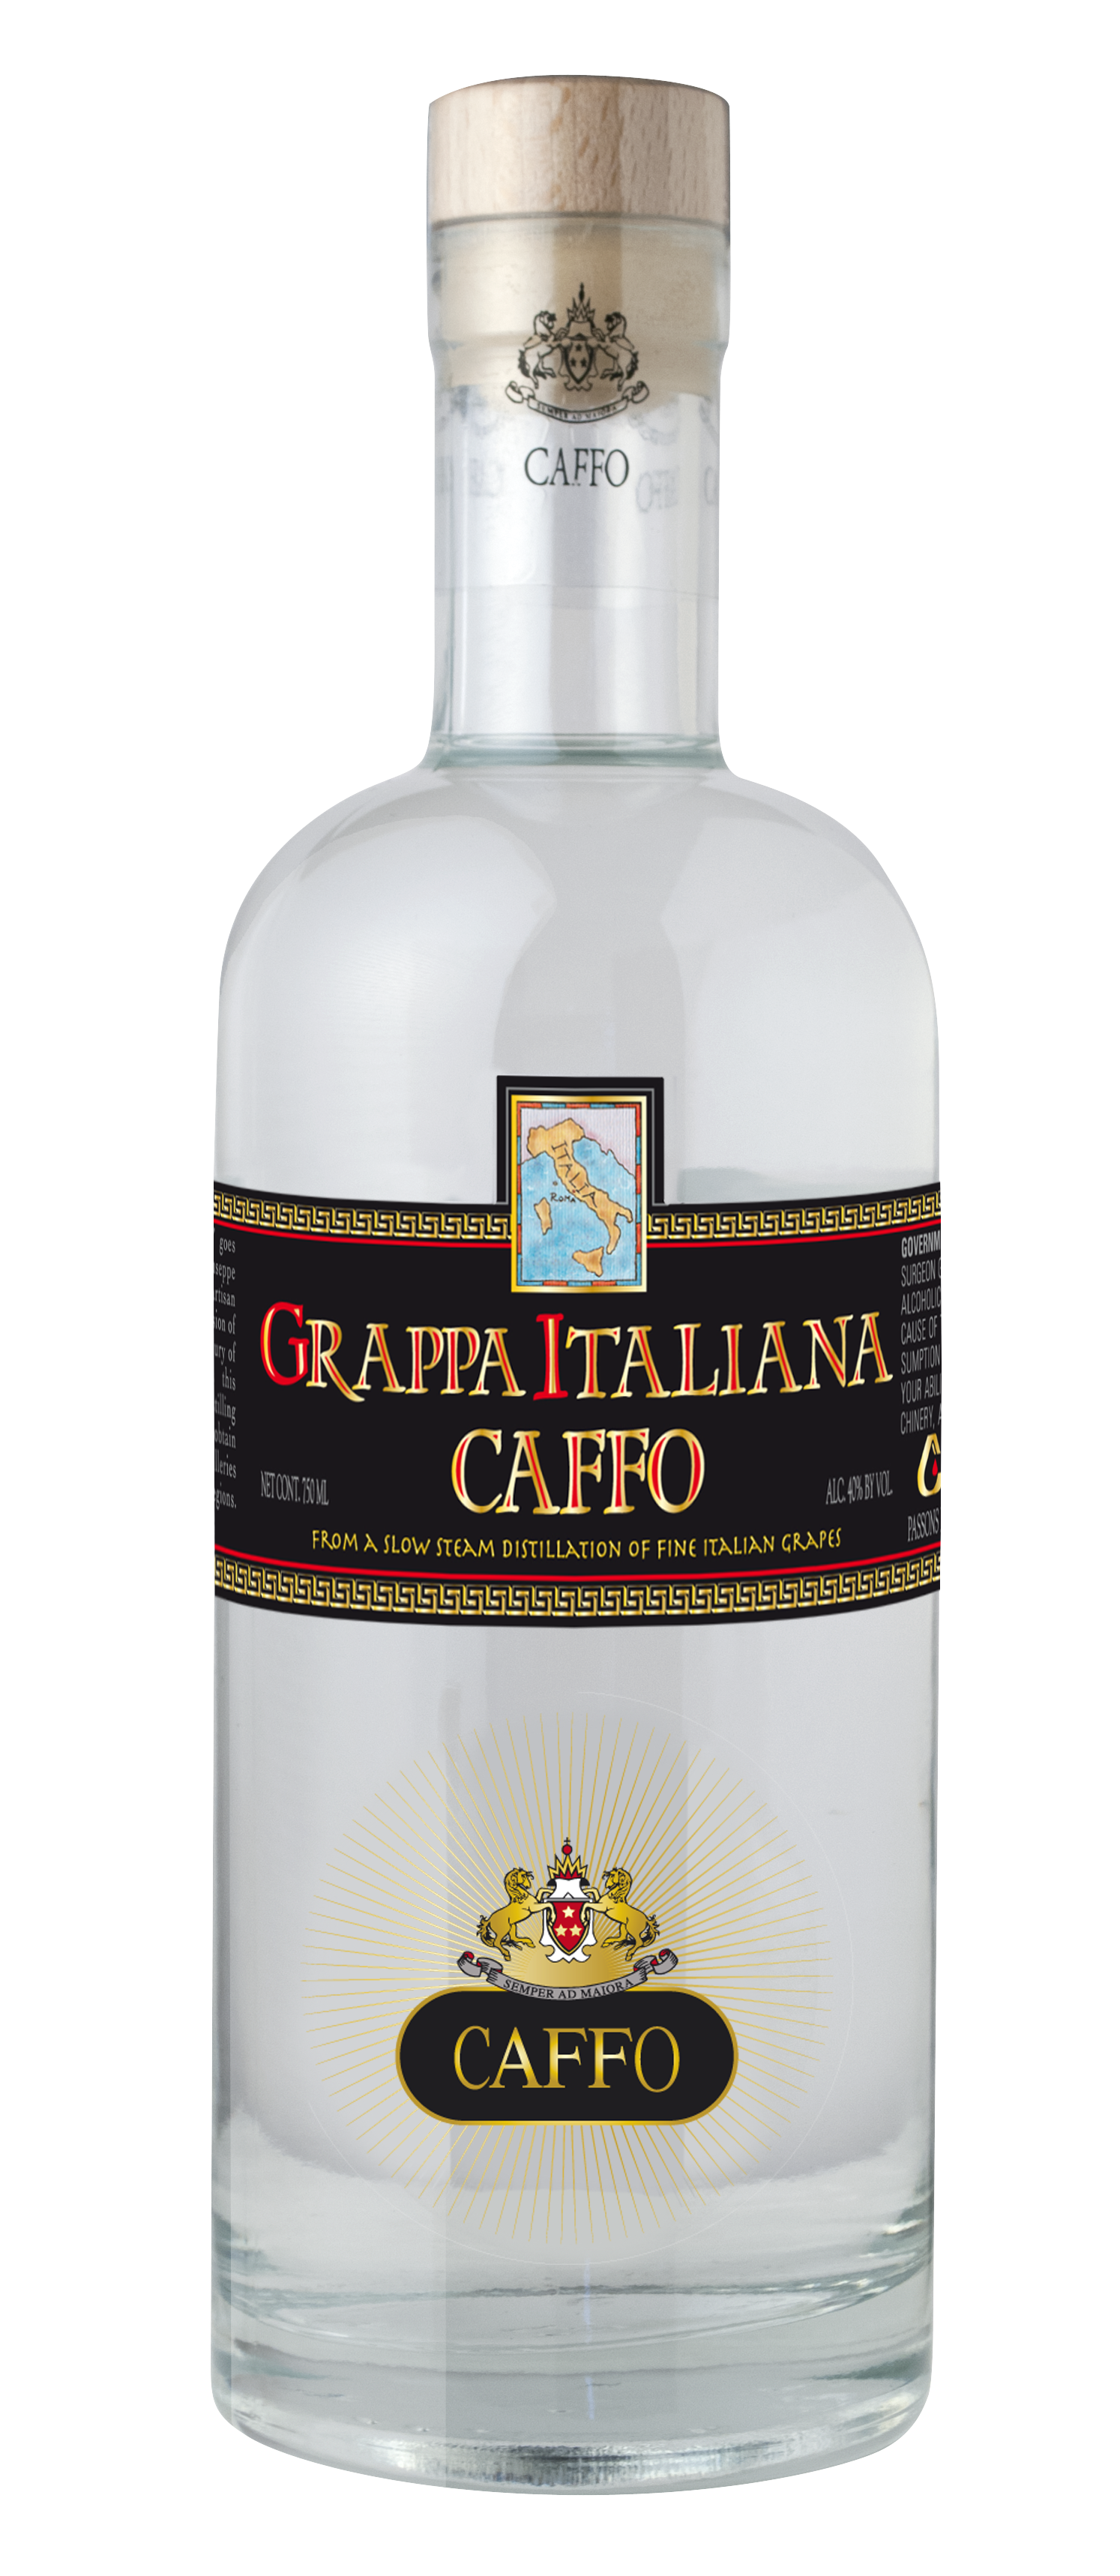 Italiana, Grappa & Caffo Spirits - Wines Skurnik